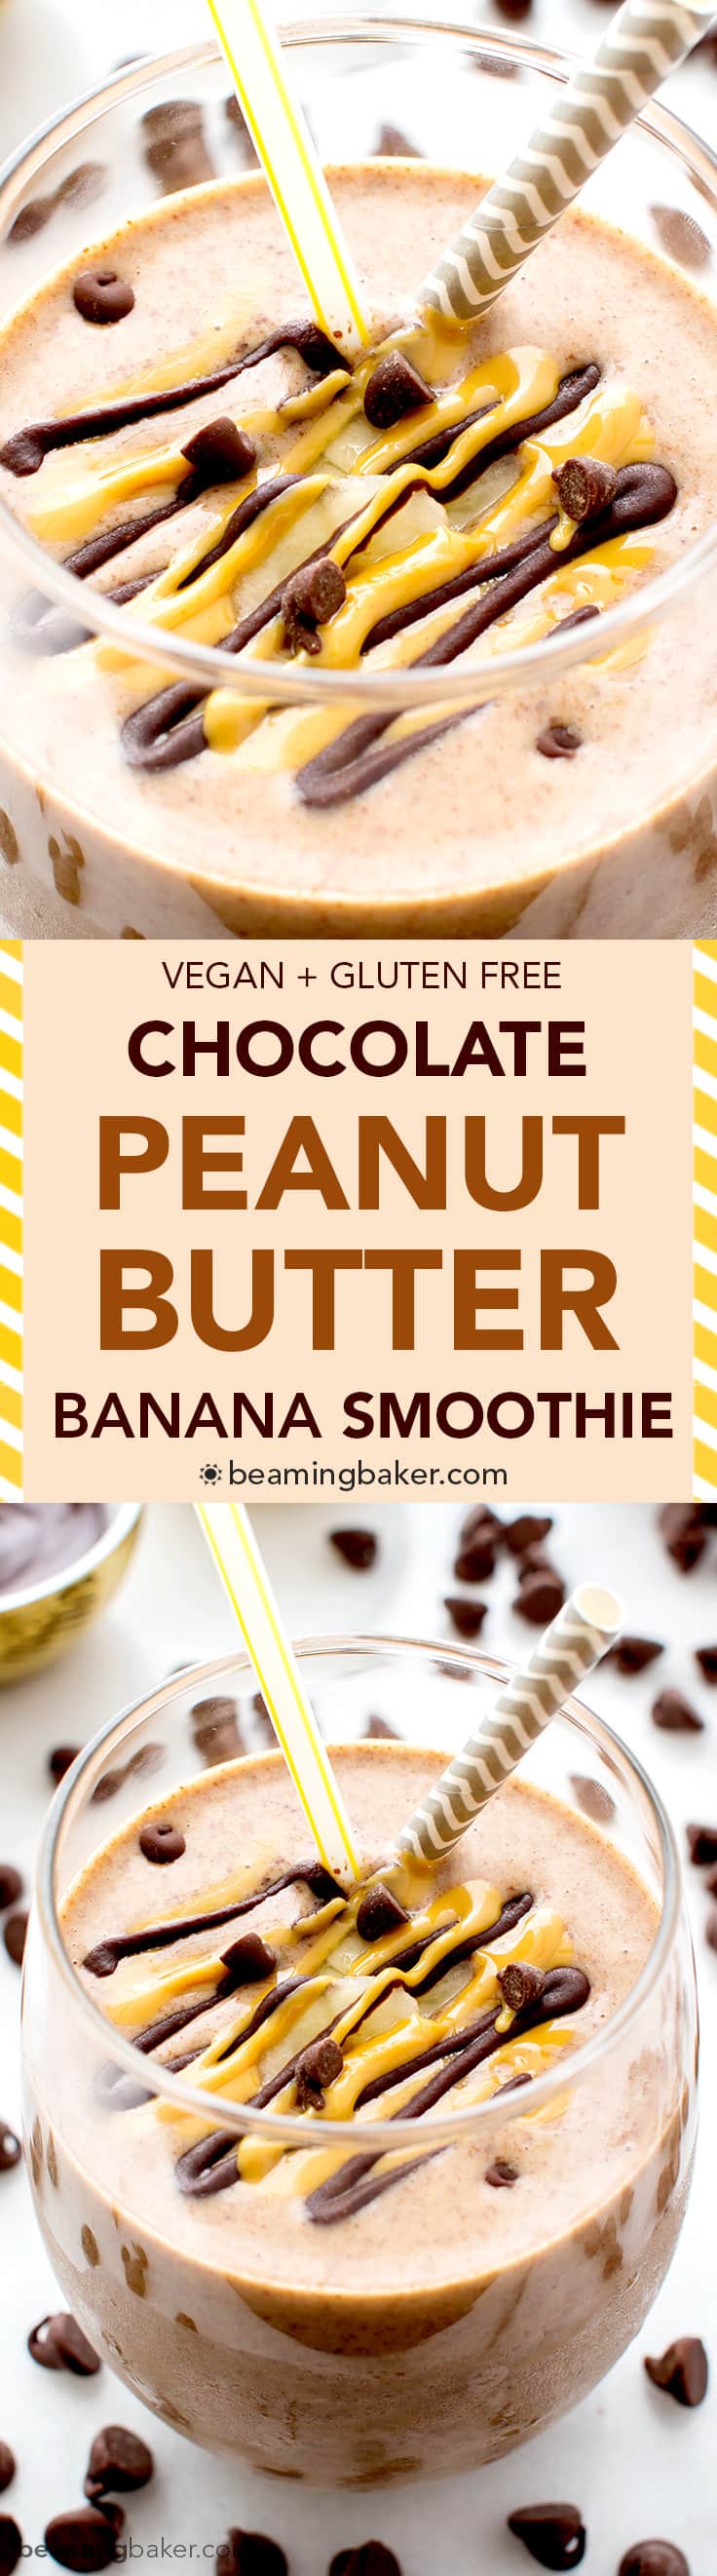 Chocolate Peanut Butter Banana Smoothie (V+GF): a protein-rich, 6-ingredient recipe for a creamy chocolate peanut butter lover’s smoothie. Tastes like a sundae. #Vegan #GlutenFree | BeamingBaker.com